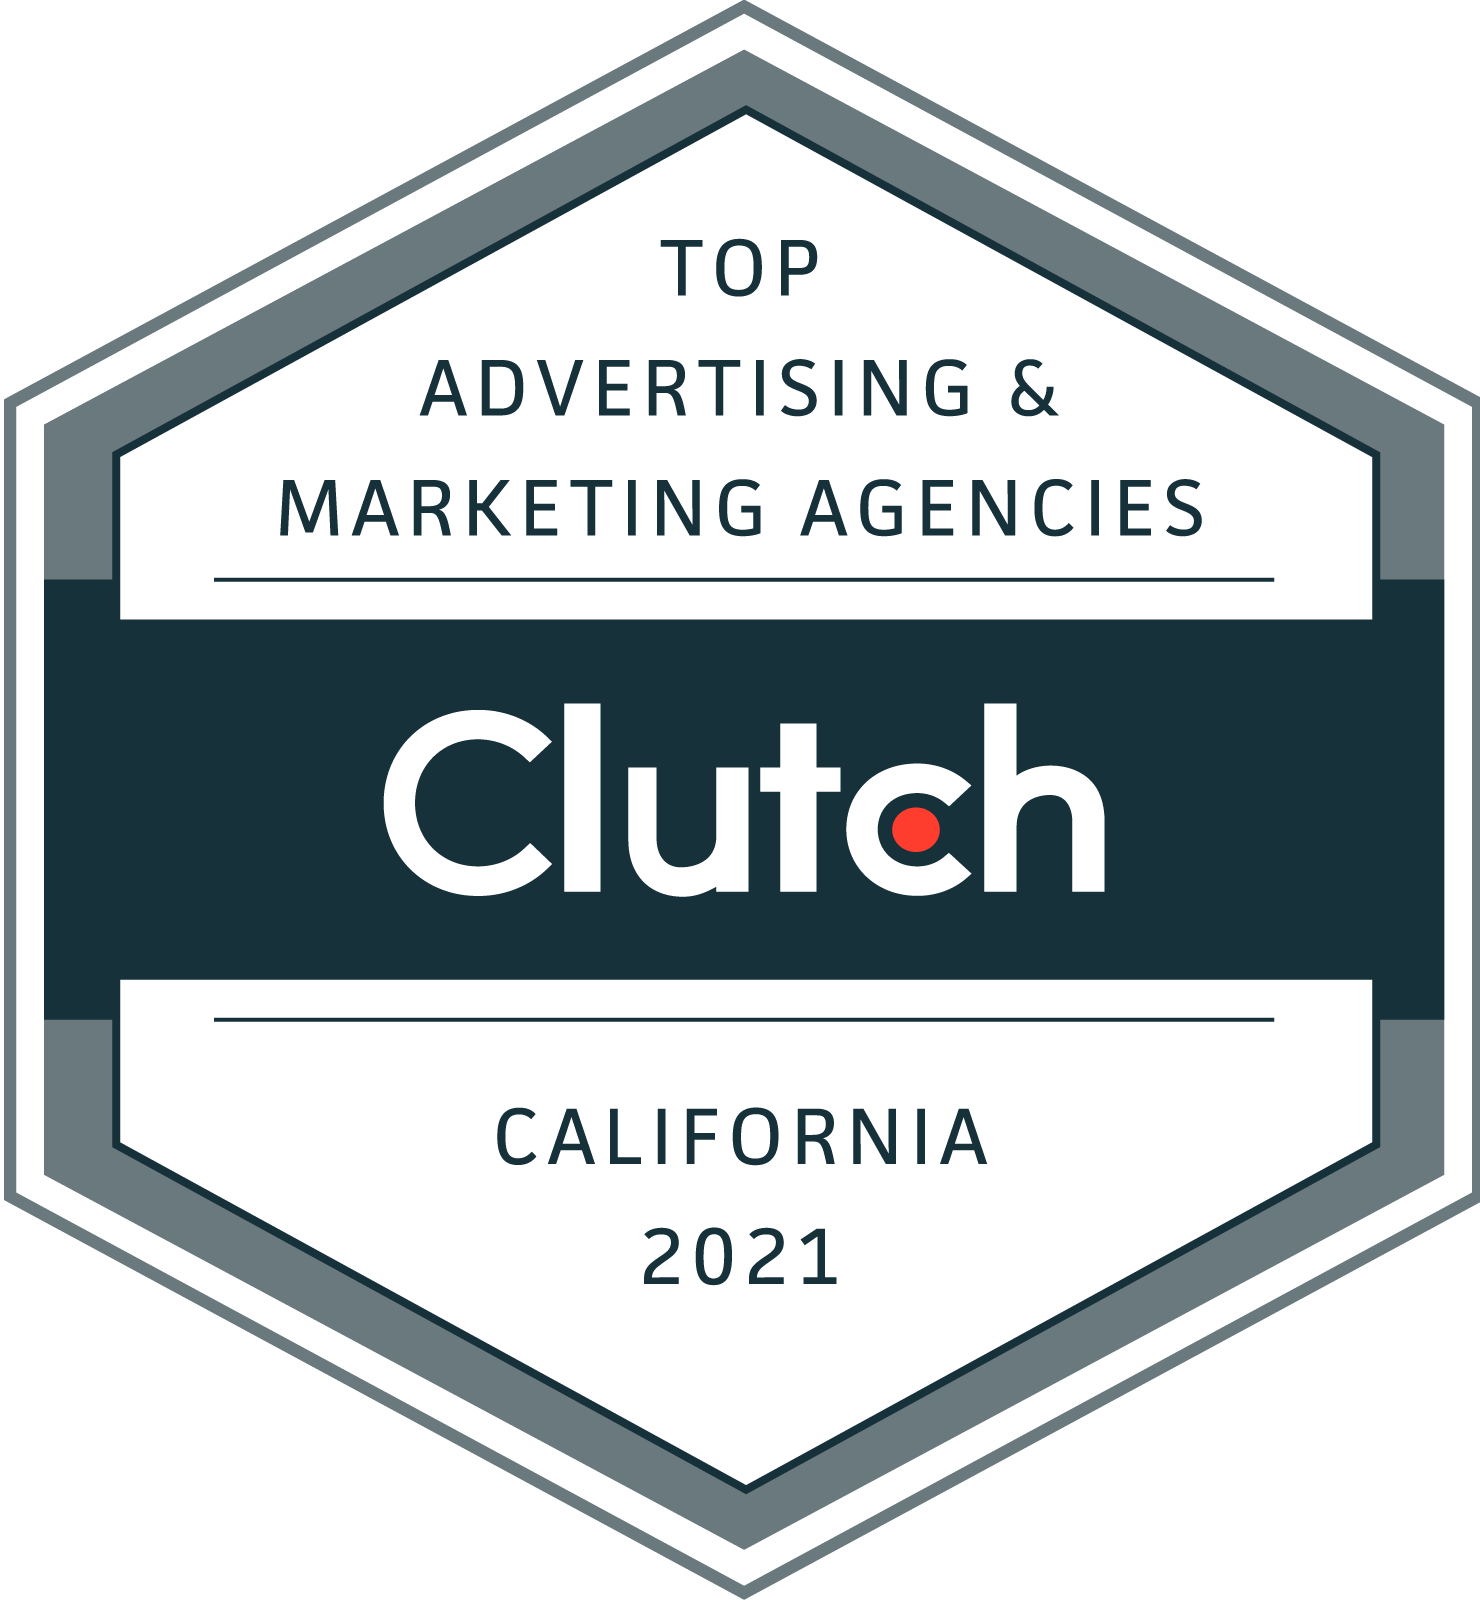 Clutch Names Marketing Wind as Top SEO Company in California 2021